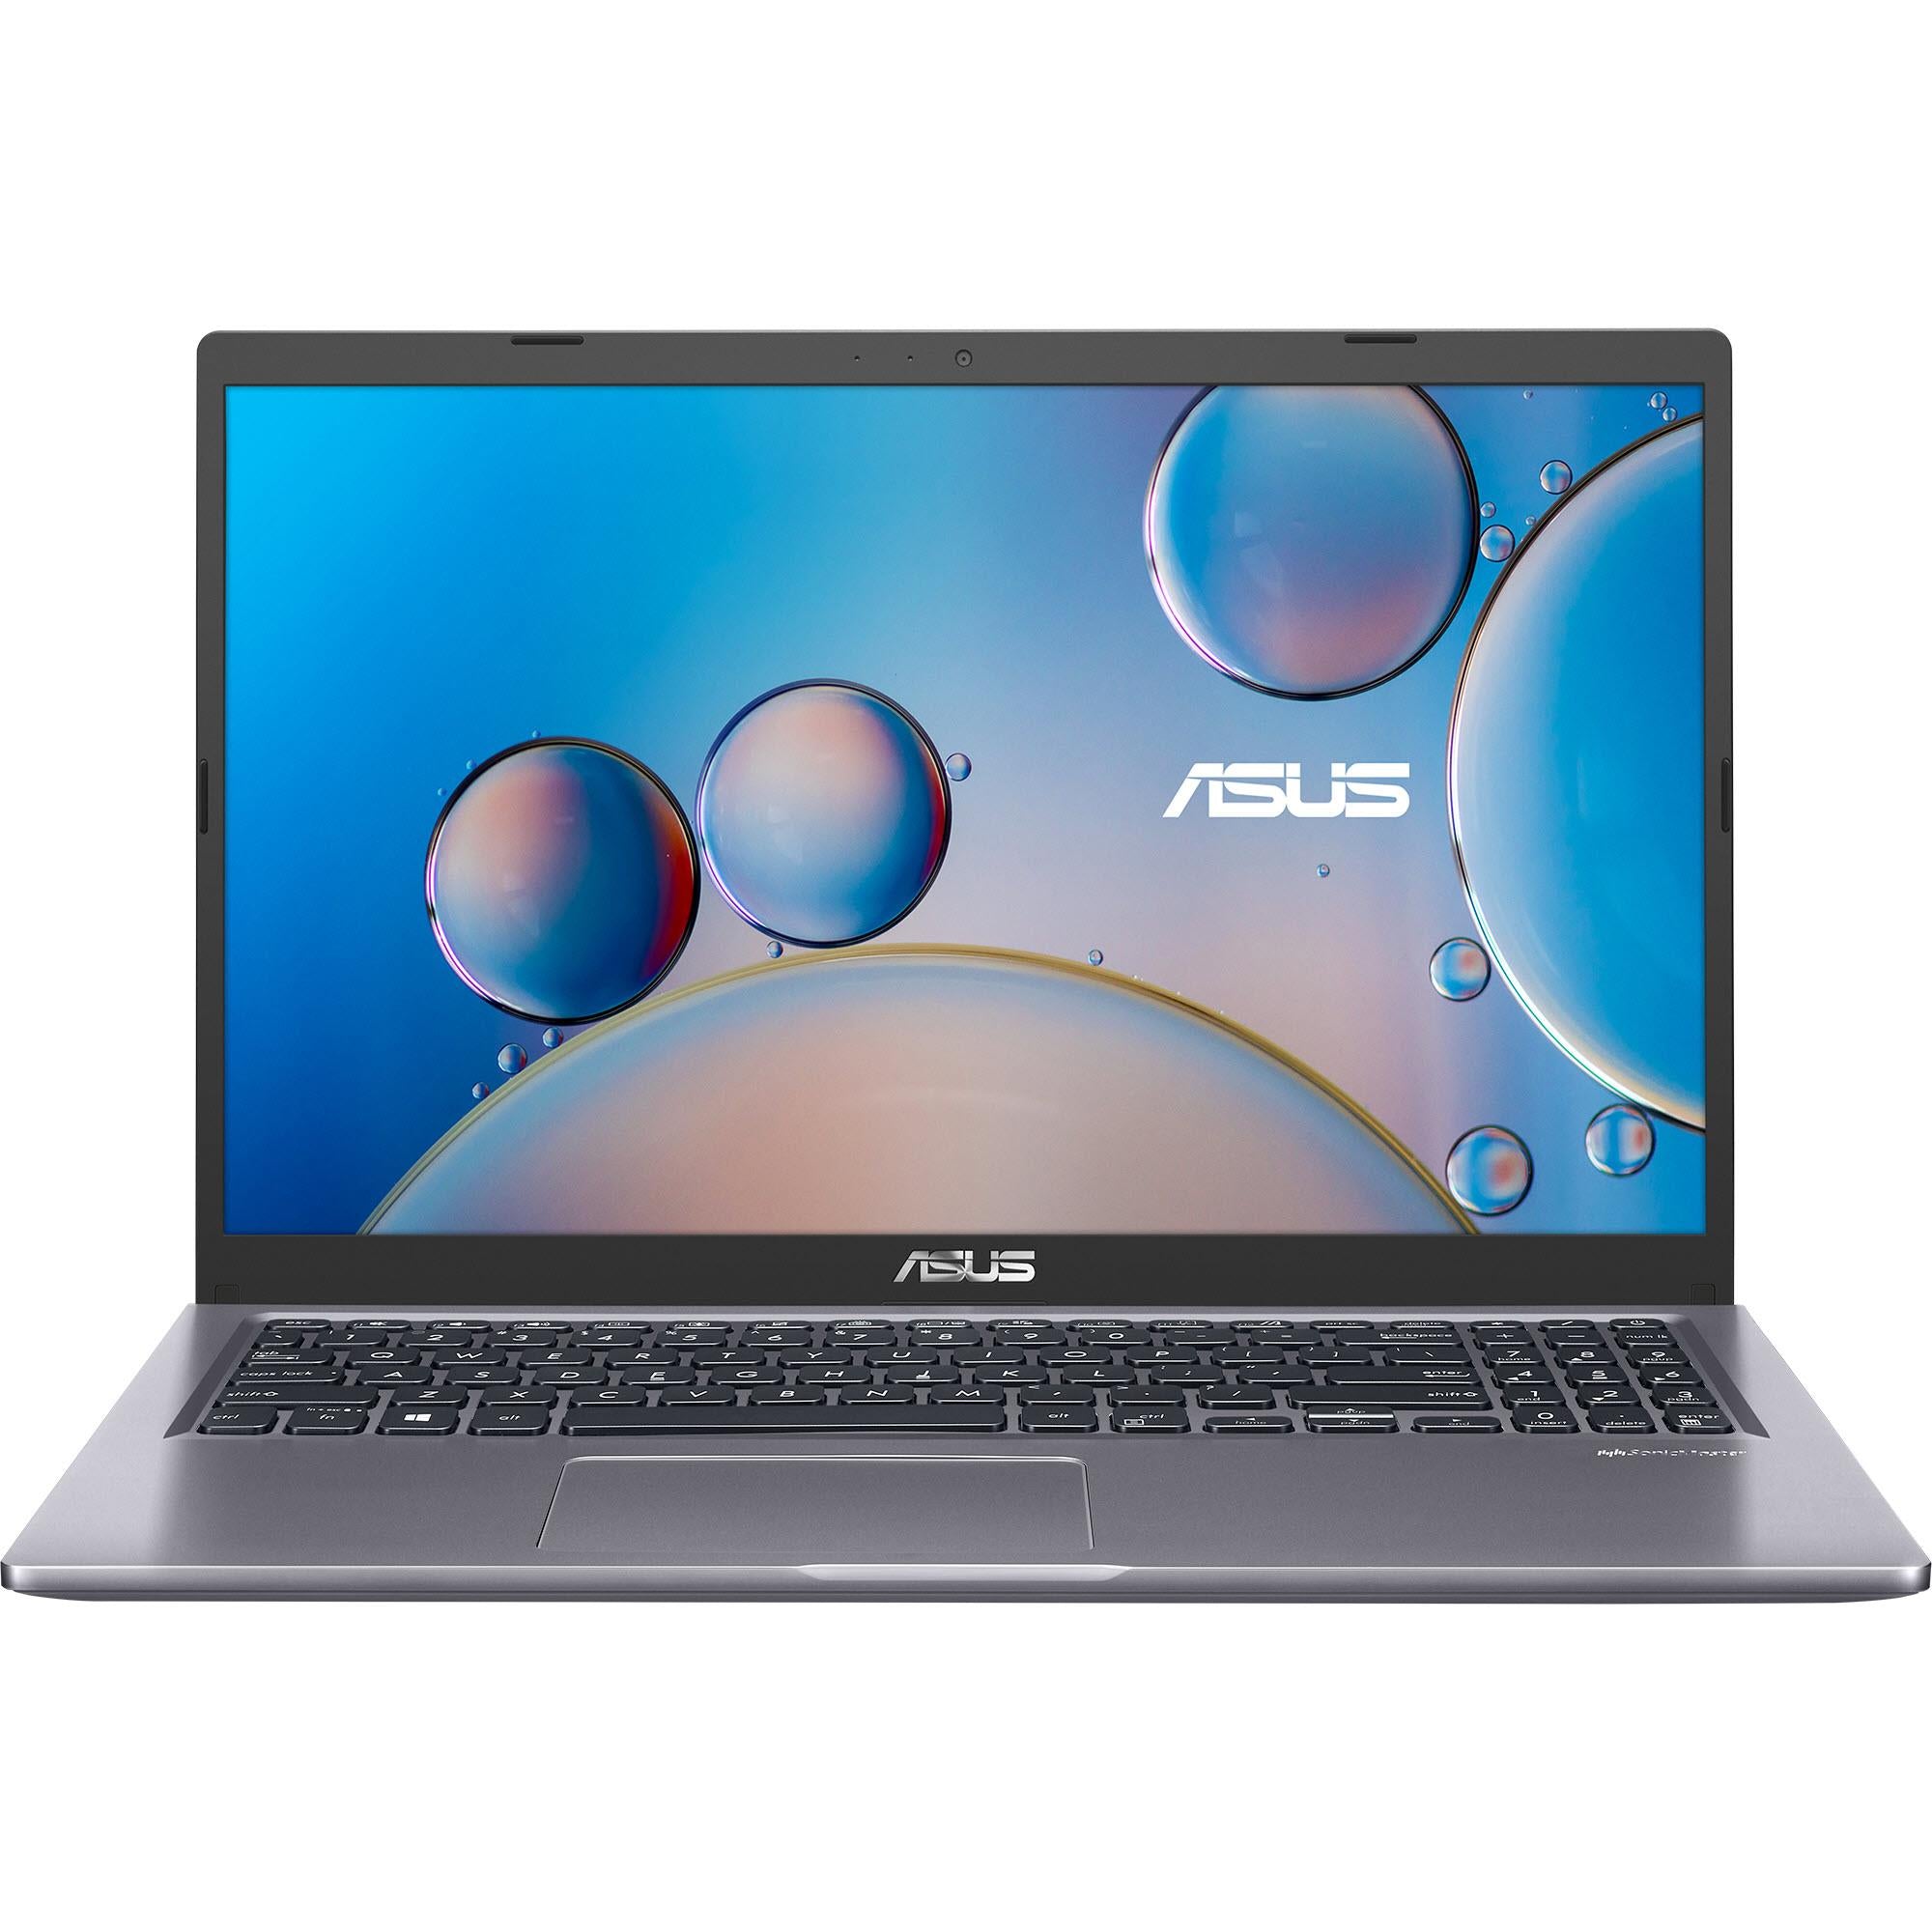 Asus Vivobook S15 S533 Thin And Light Laptop 15 6 Fhd Intel Core I7 10210u Cpu 8 Gb Ddr4 Ram 512 Gb Pcie Ssd Windows 10 Home